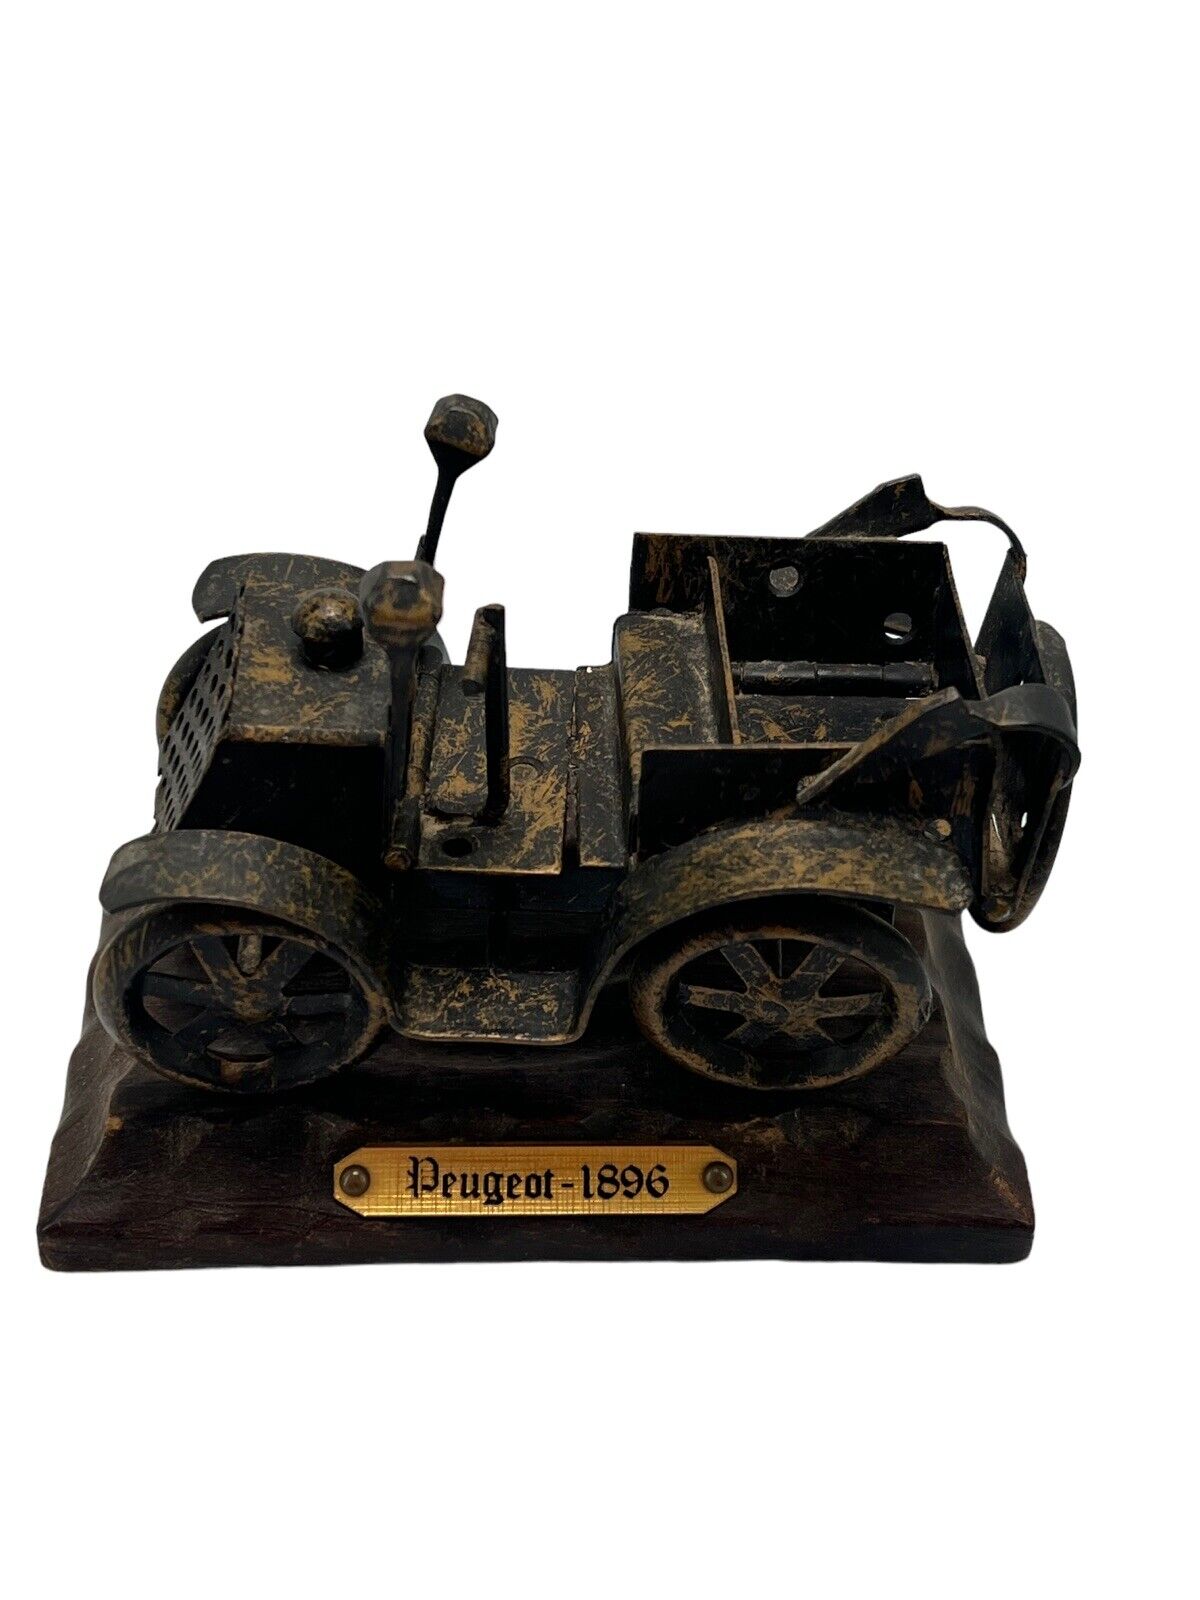 Vintage Peugeot 1896 Folk Art model car automobile Industrial Sculpture Model 